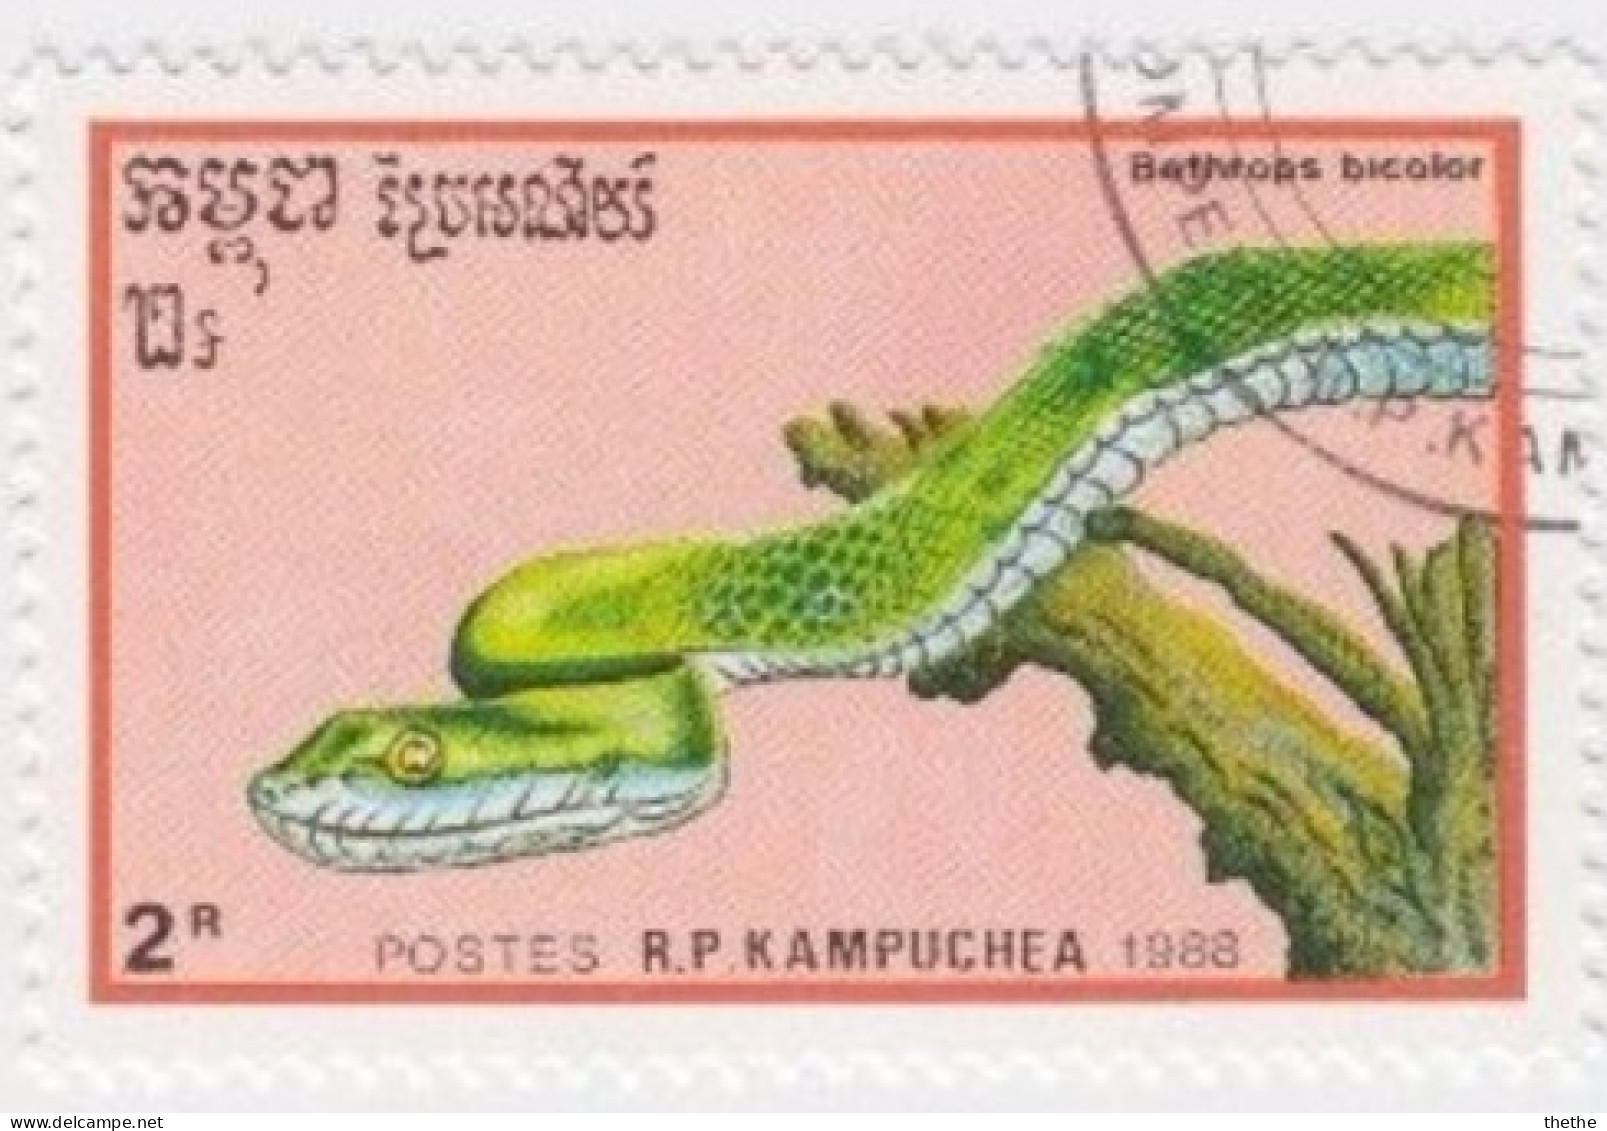 KAMPUCHEA  -  Serpent : Bothrops Bicolor - Snakes